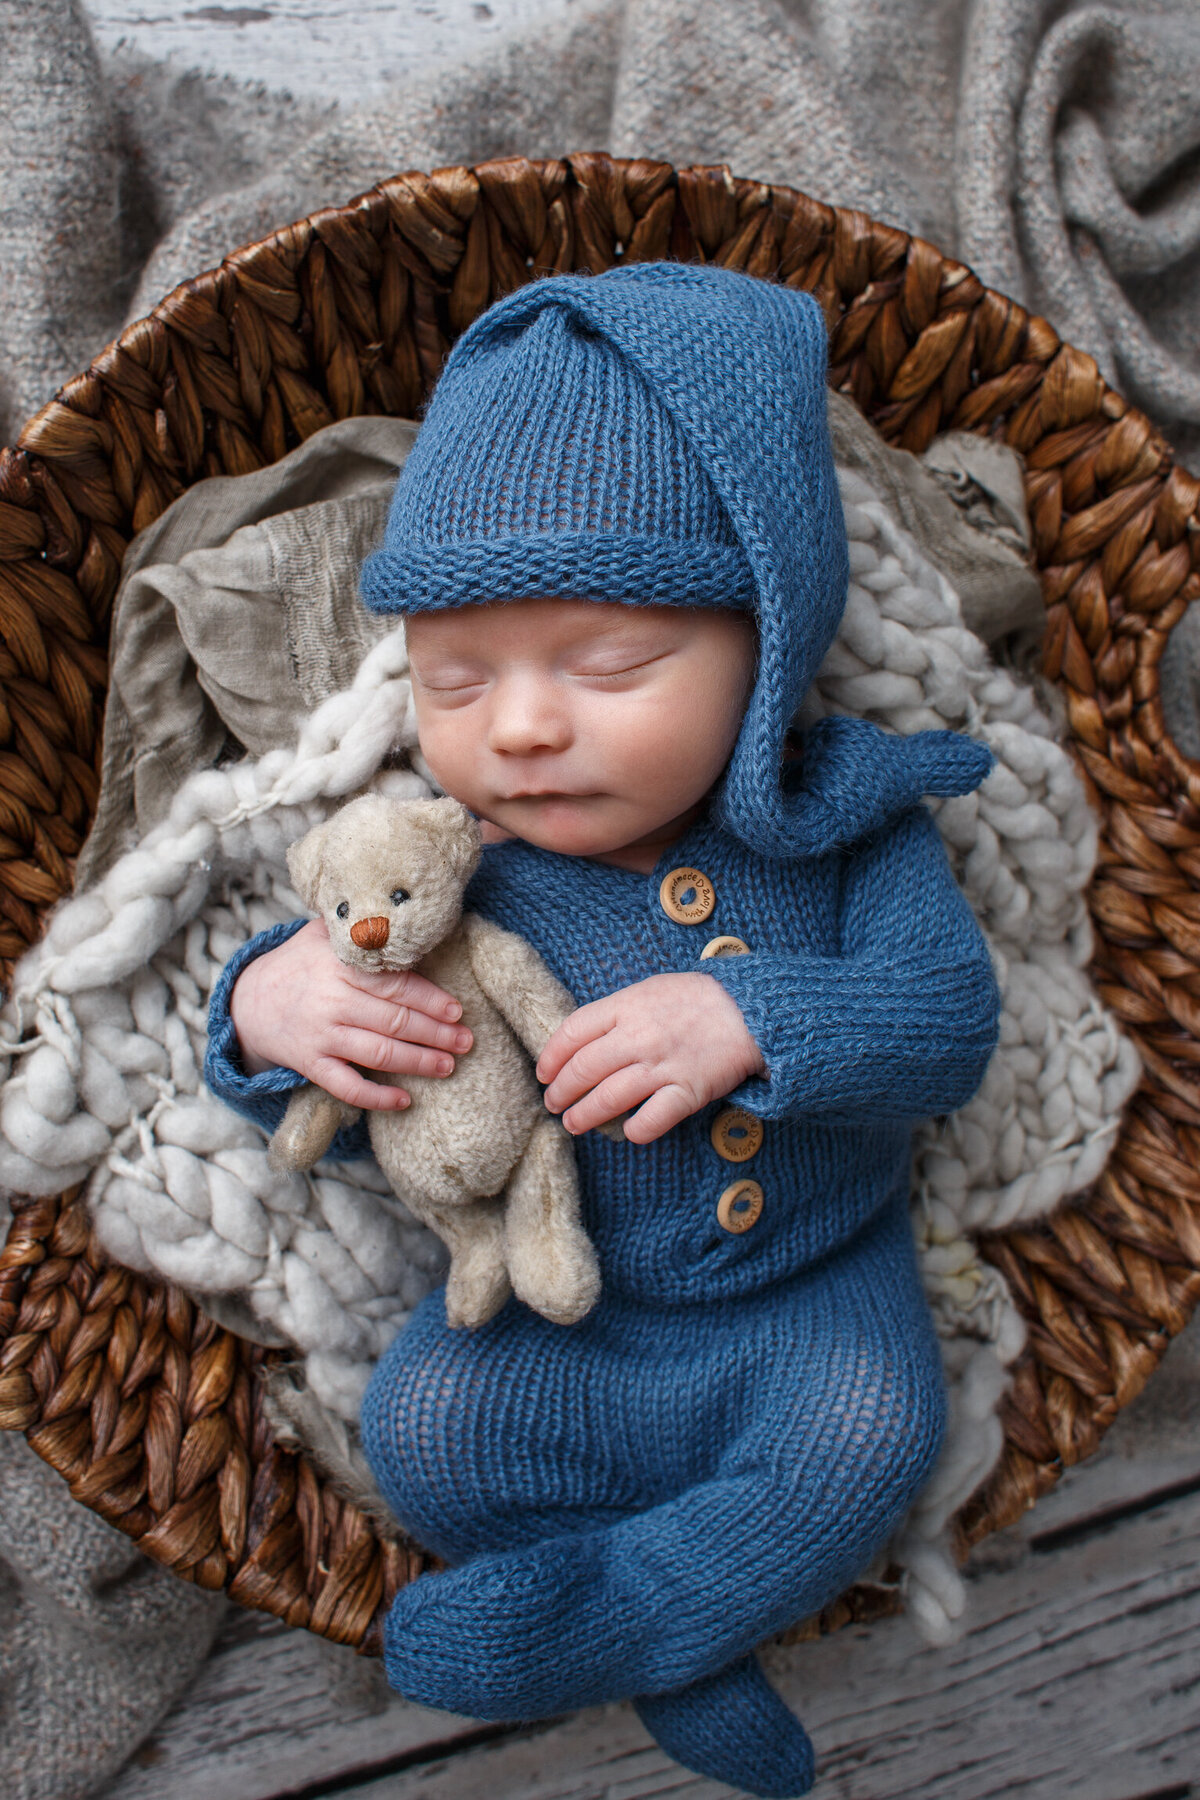 Newborn baby boy dressed in a blue sleeper and cap holding a tiny teddy bear